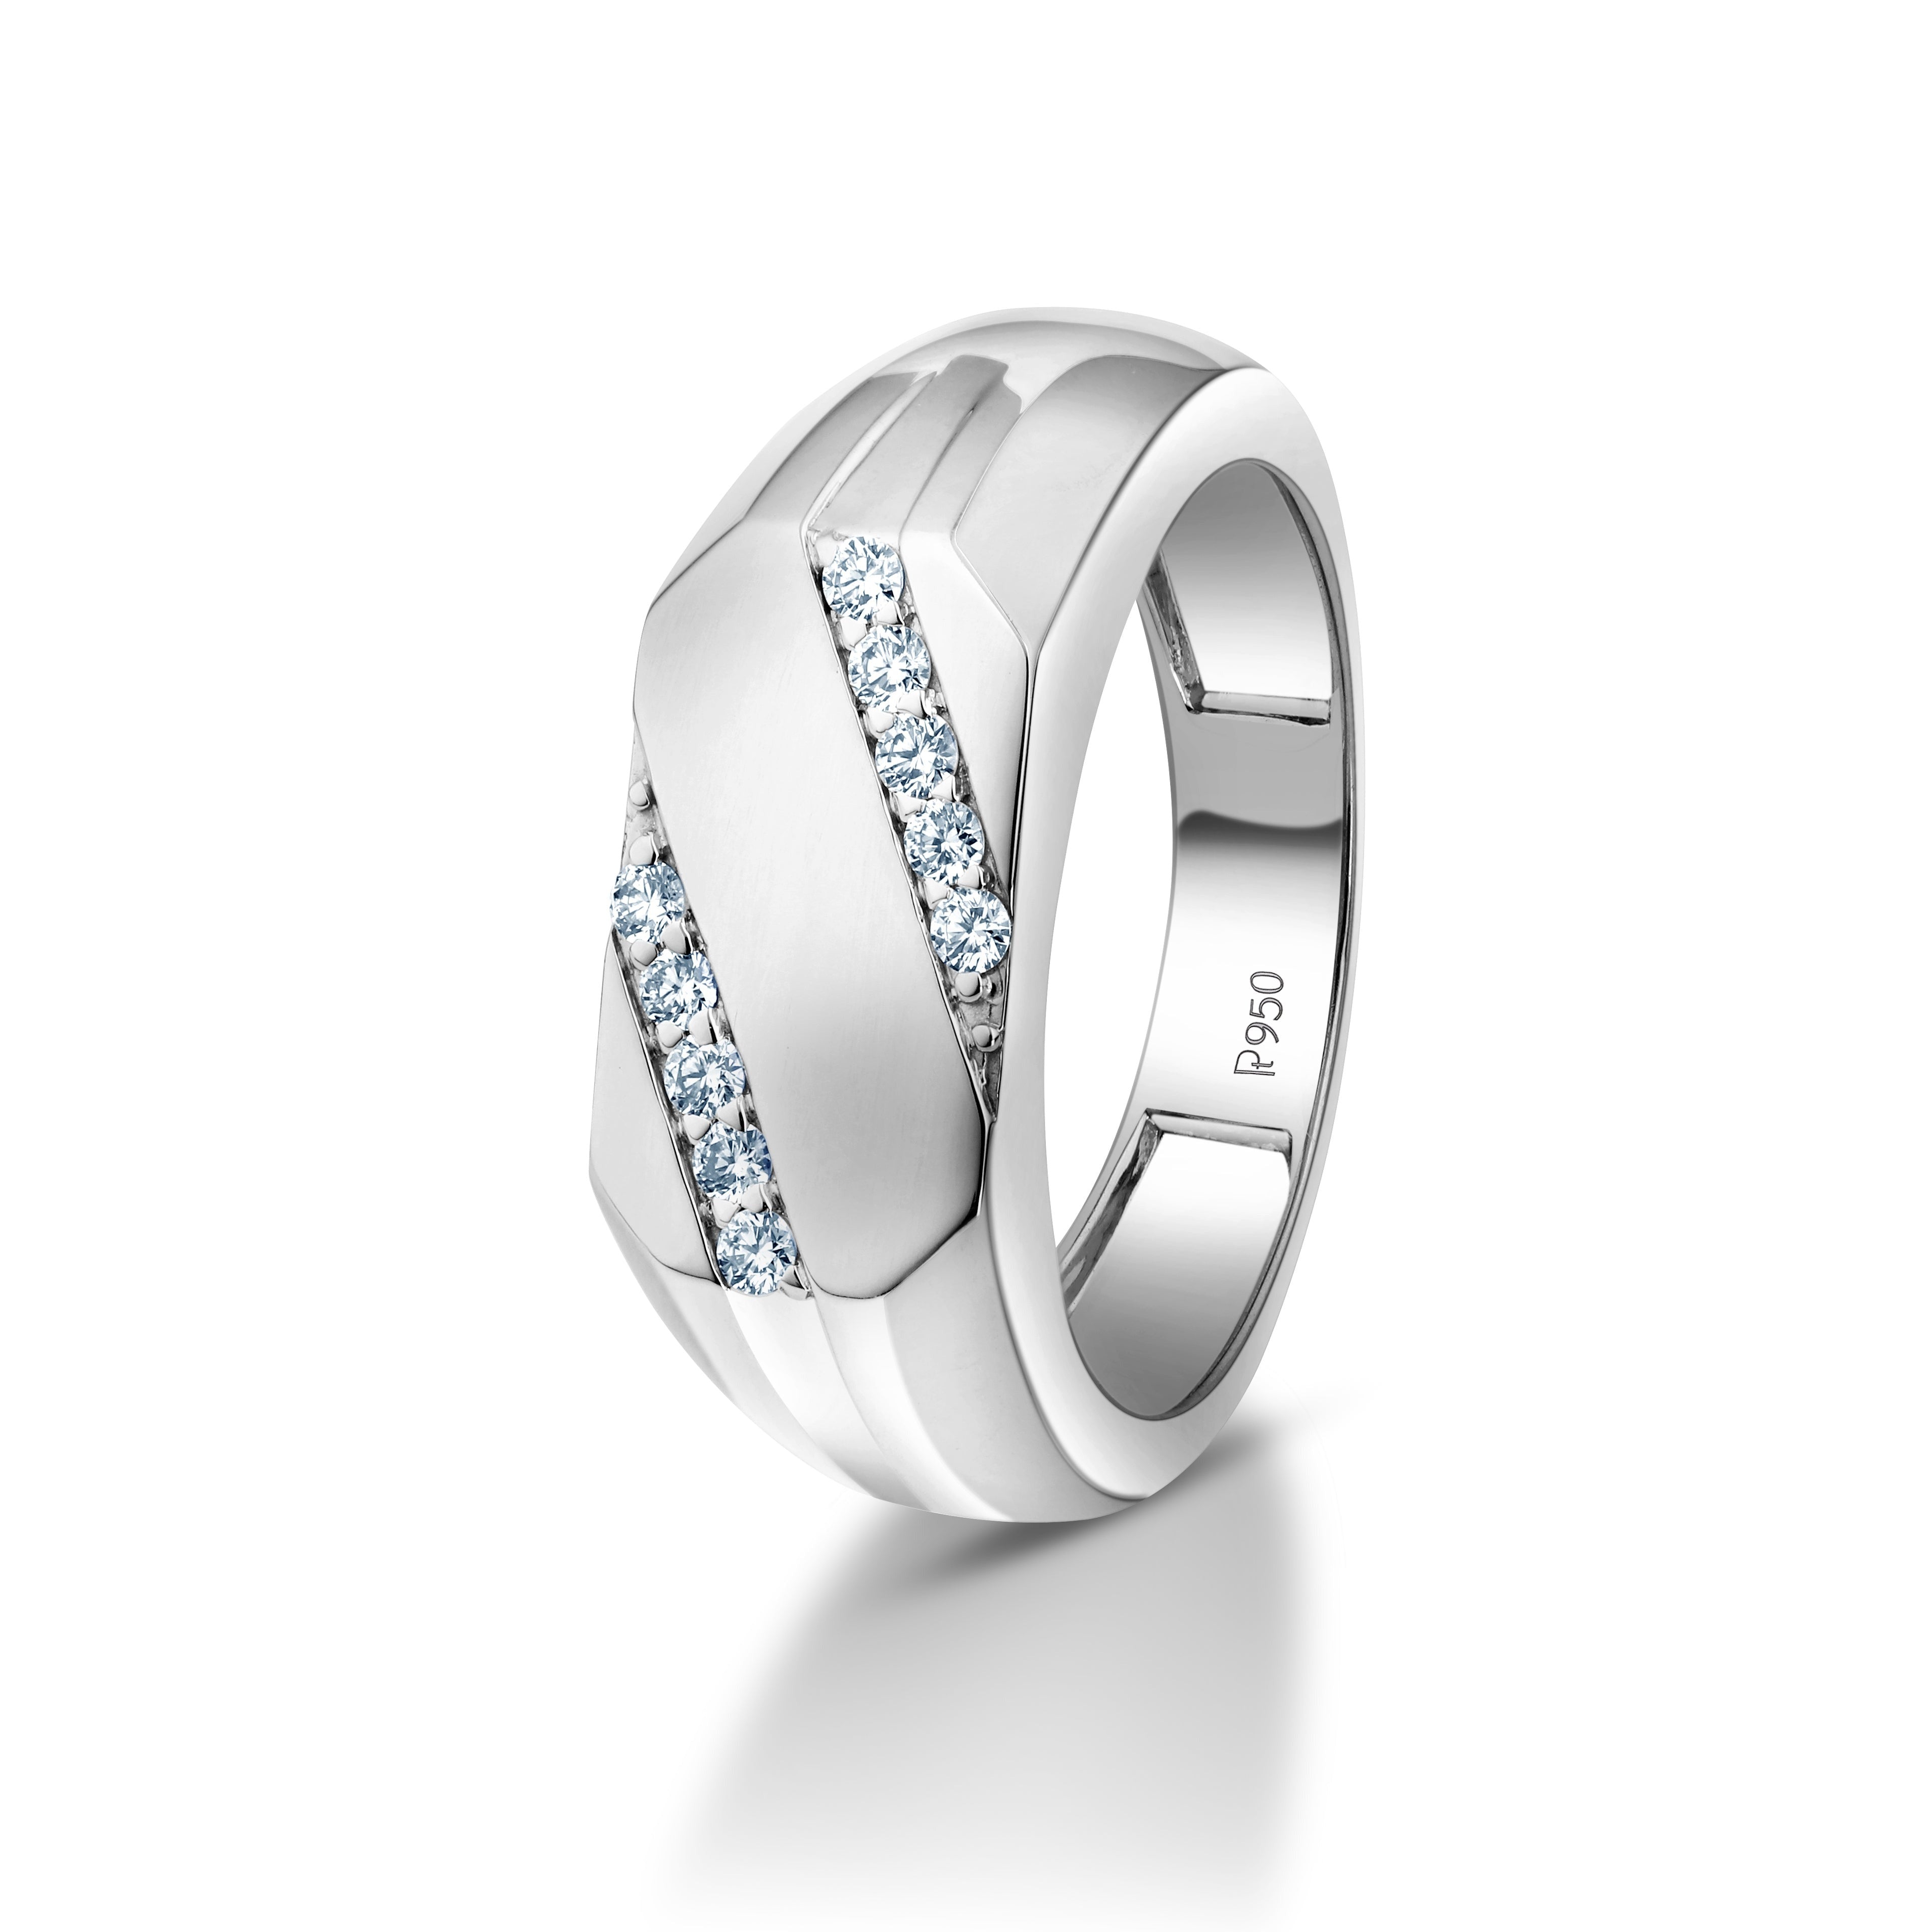 Buy Unique Men's Finger Ring in Platinum Online | ORRA